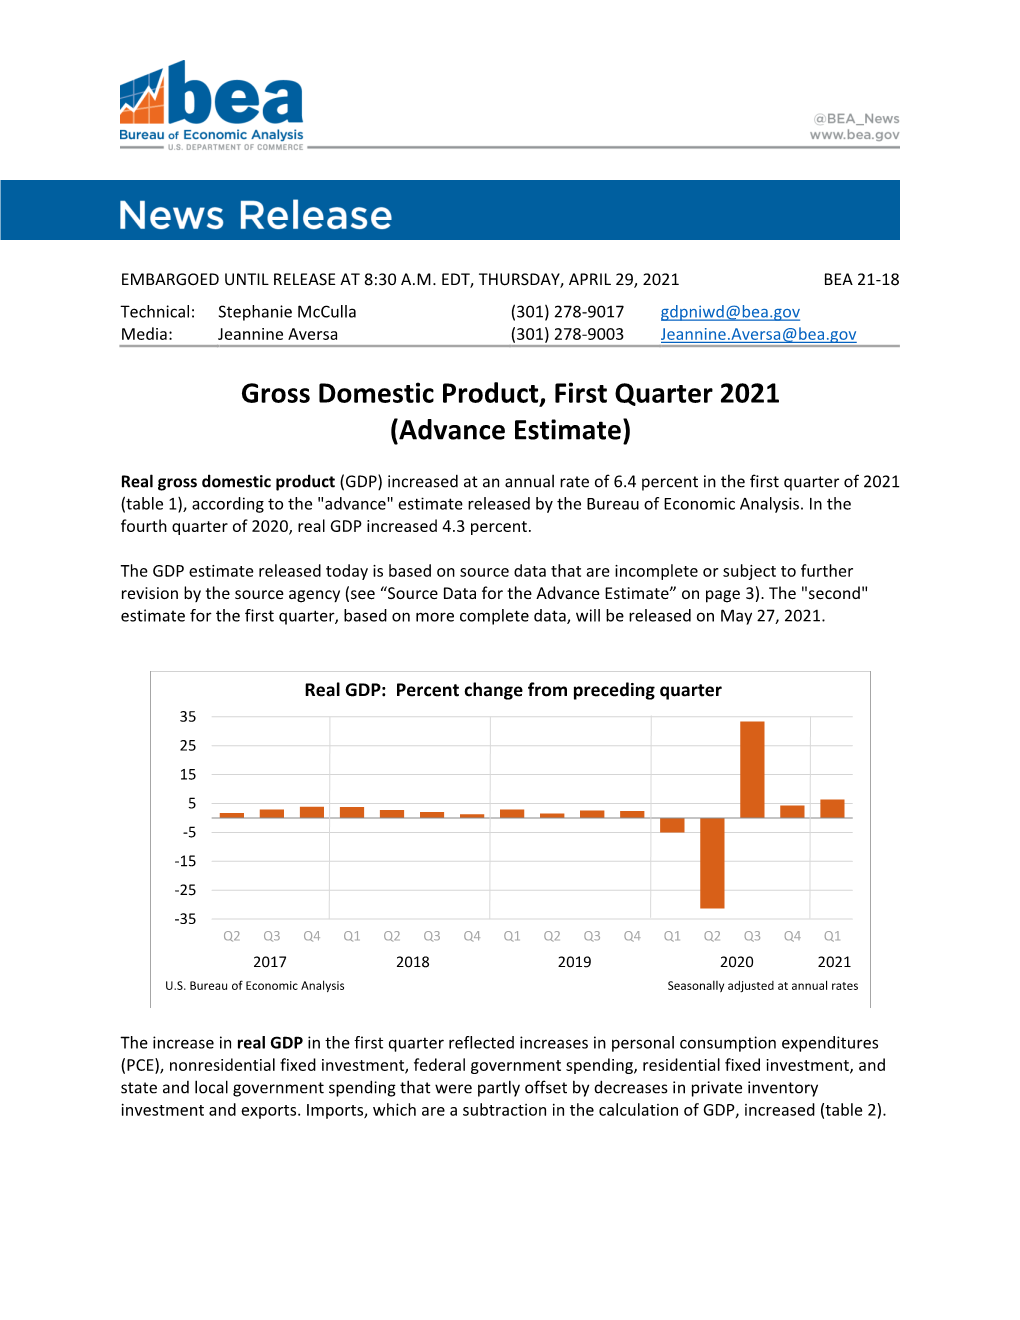 Gross Domestic Product, First Quarter 2021 (Advance Estimate)